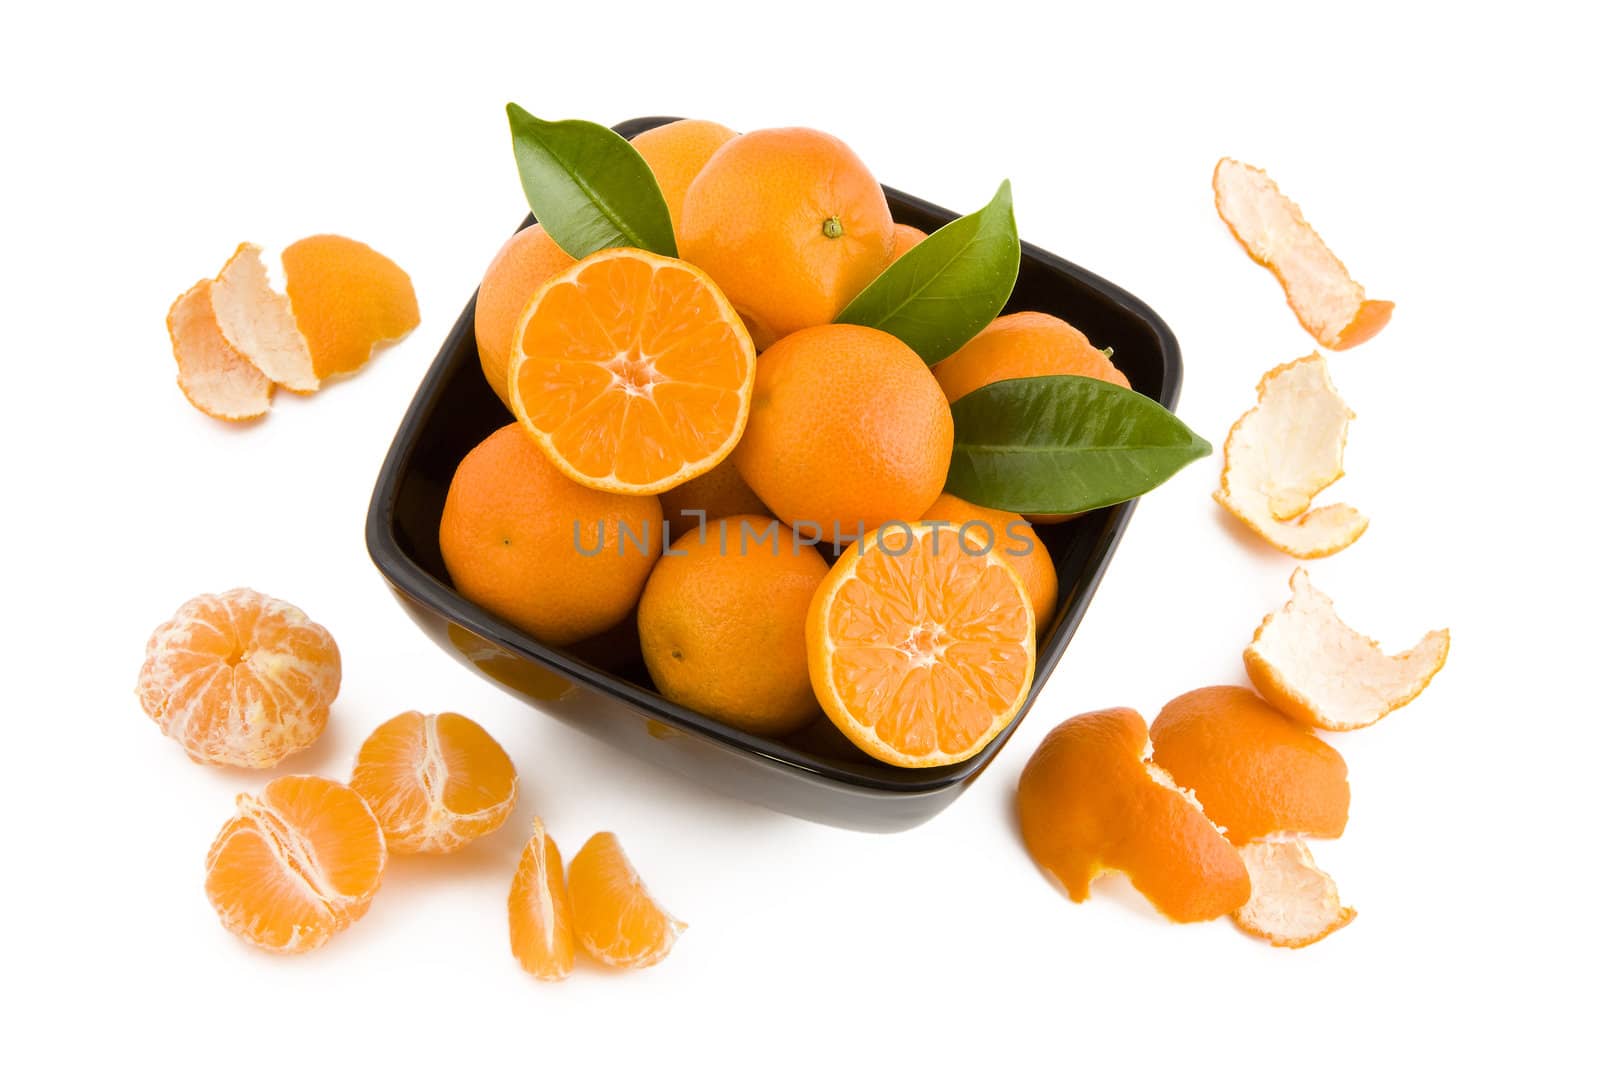 Fresh tangerines in a bowl by Gbuglok